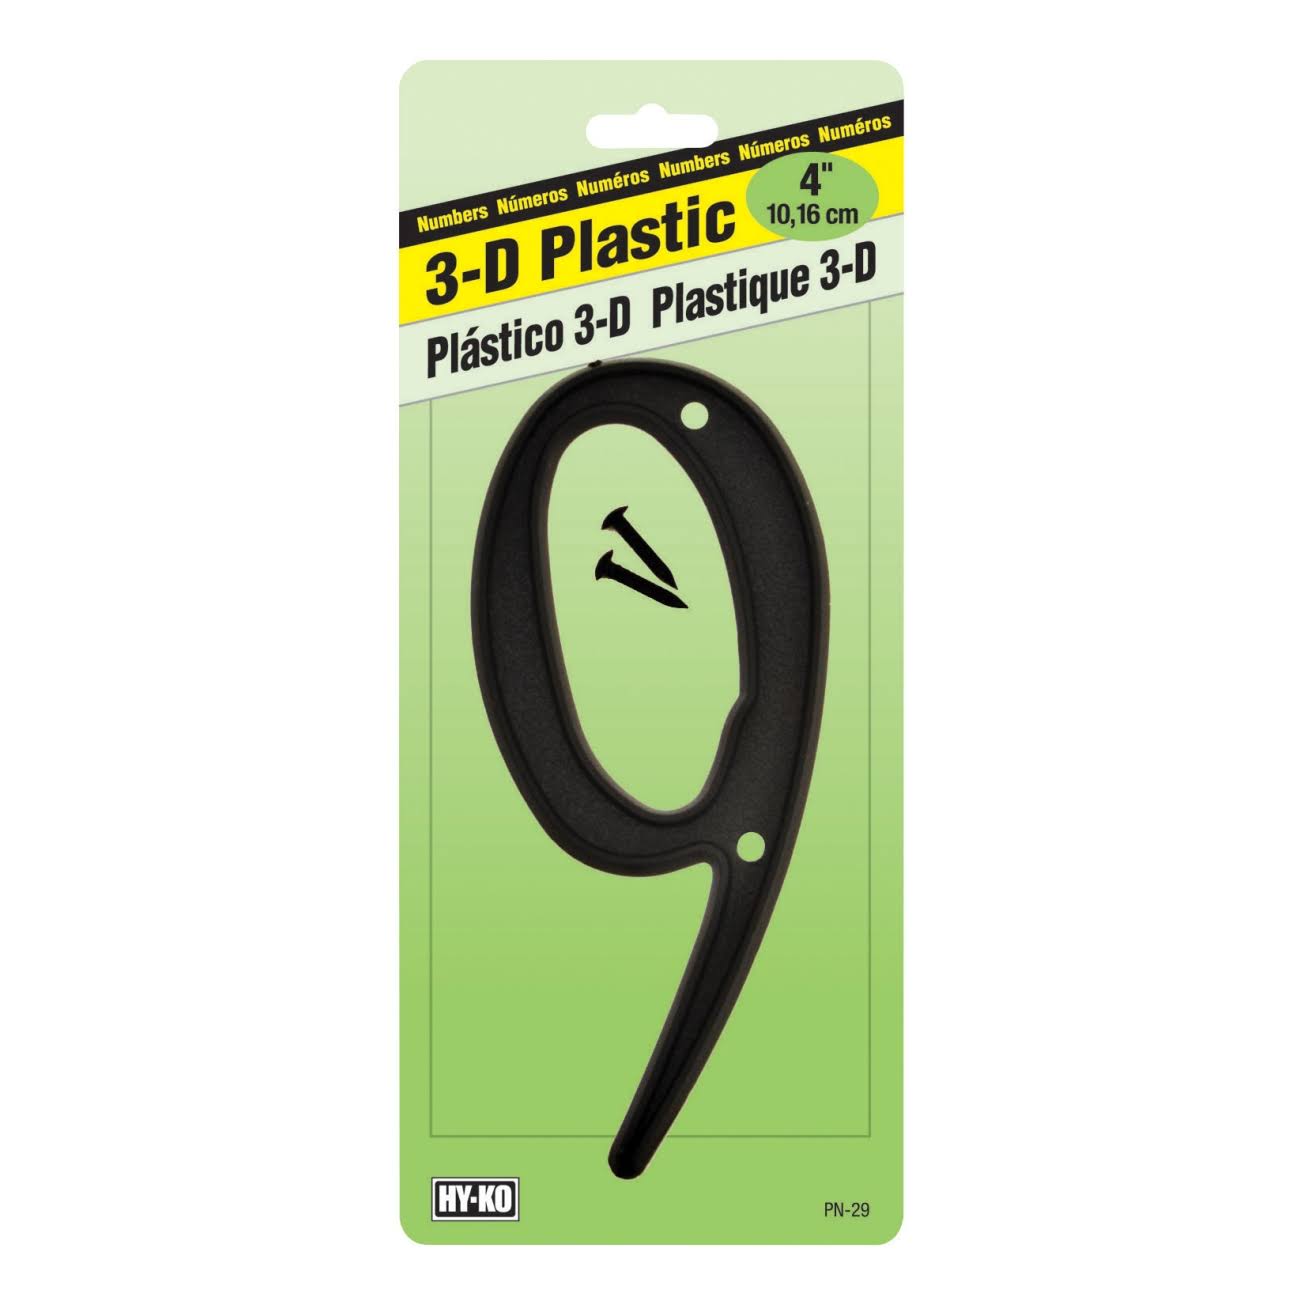 Hy-ko Plastic Number - Number 9, 4''